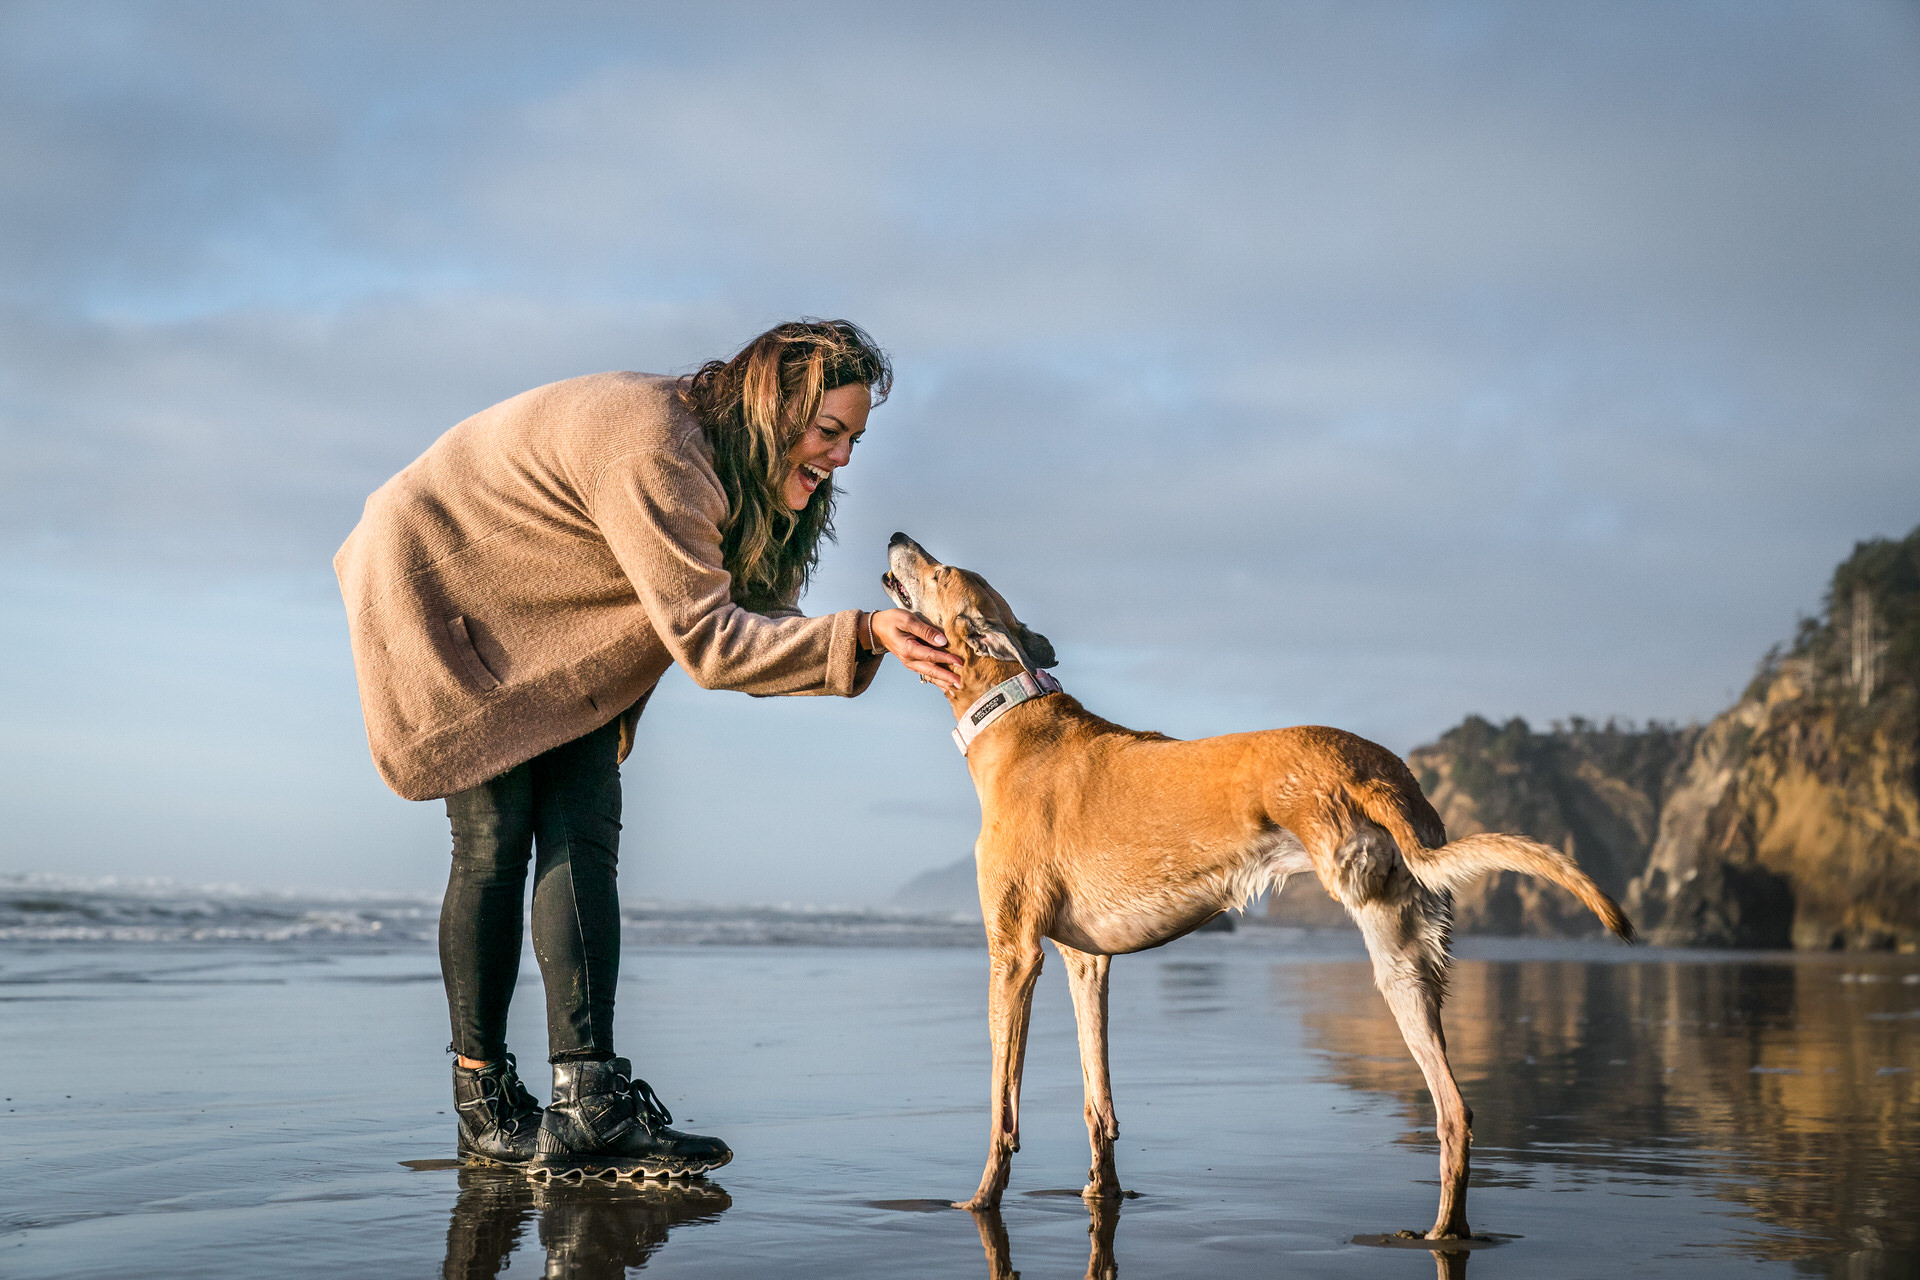 woman with dog on beach